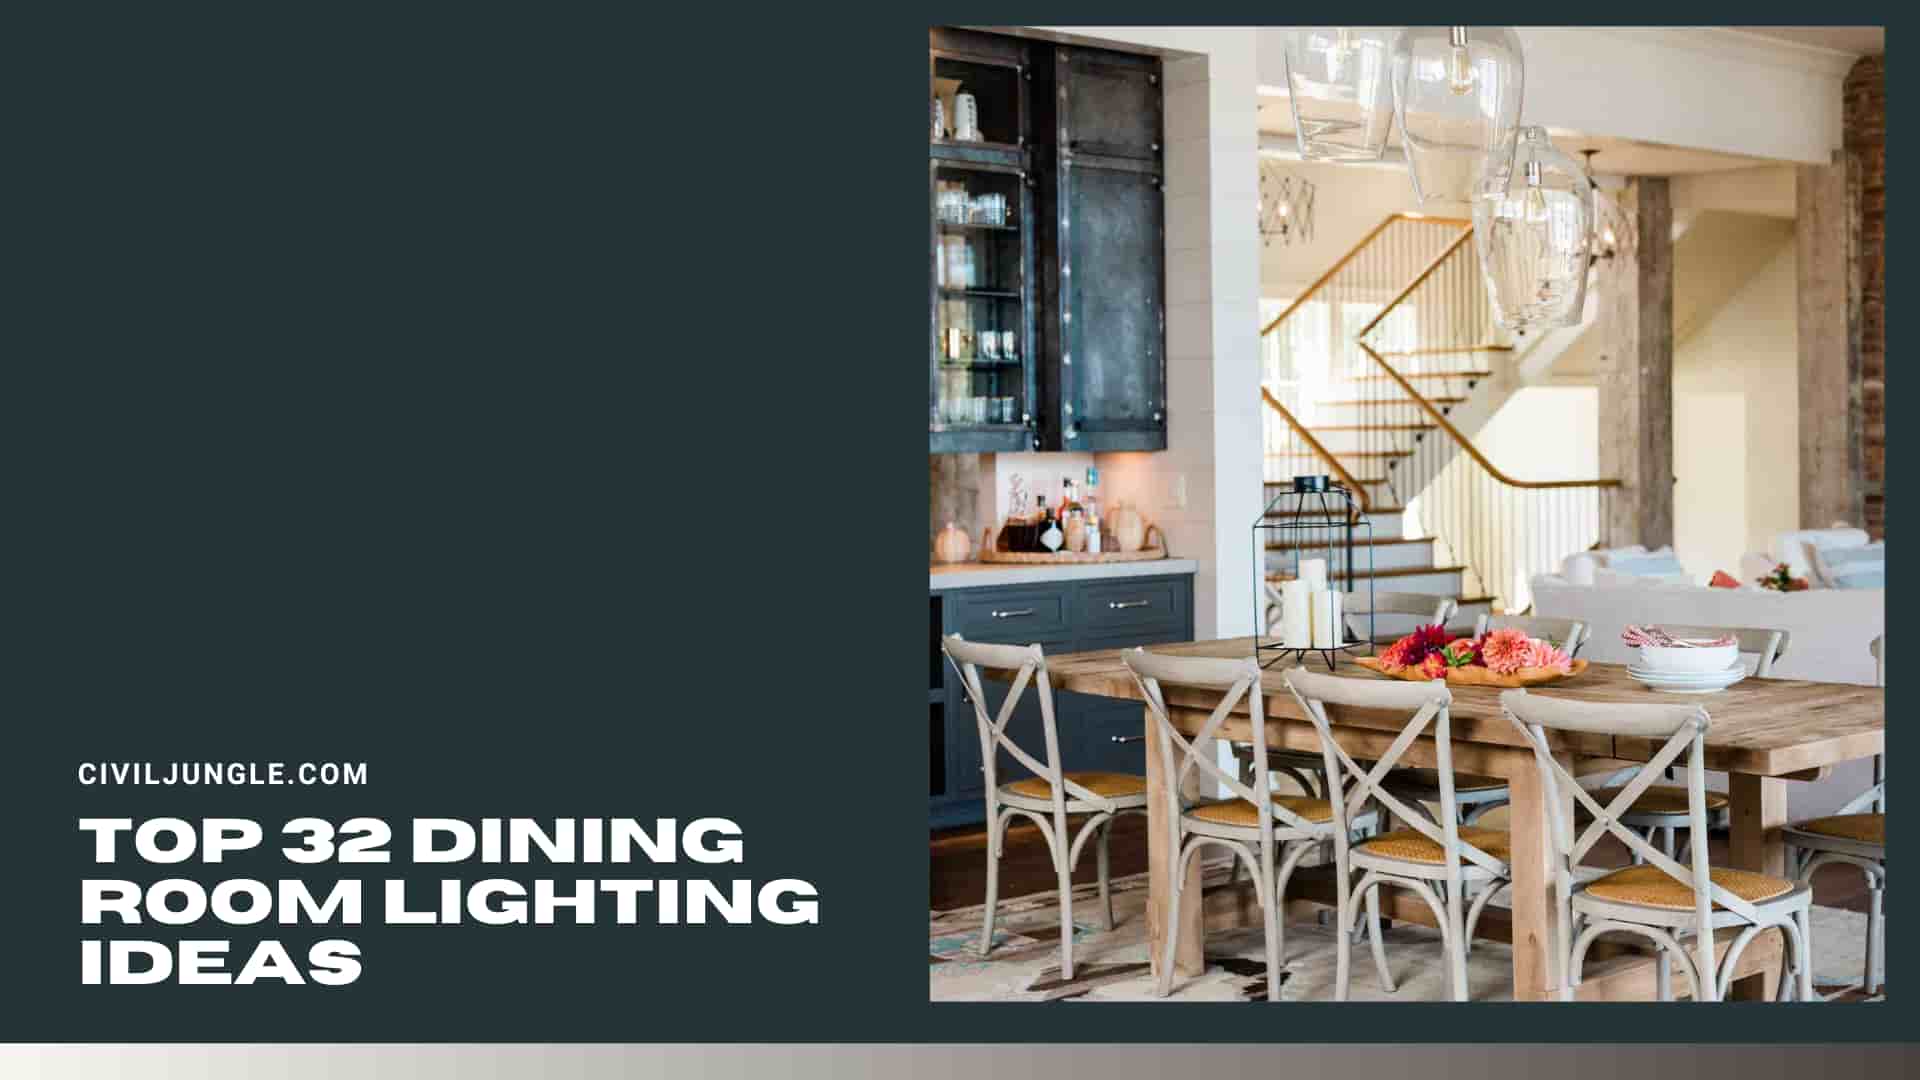 Top 32 Dining Room Lighting Ideas